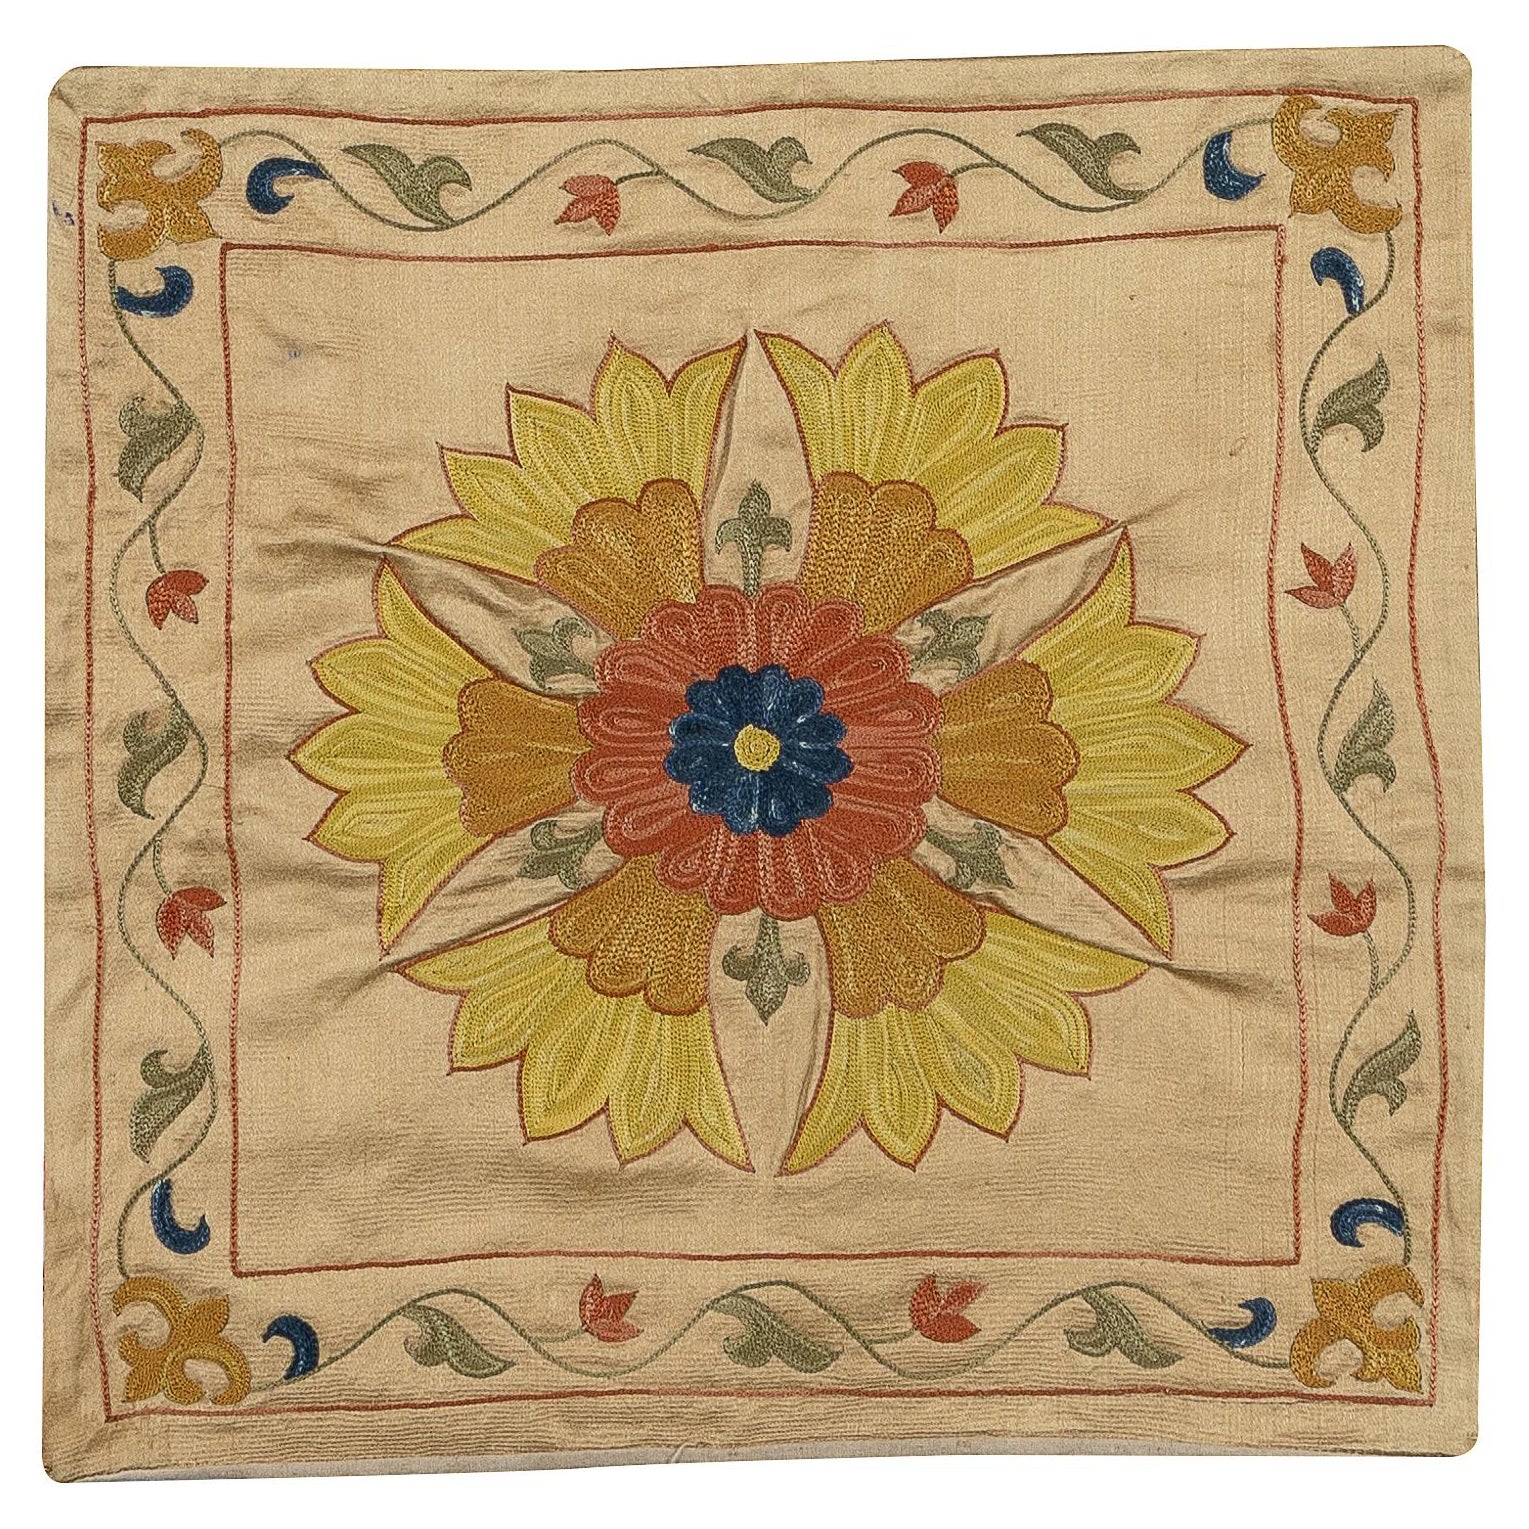 18"x18" New Uzbek Suzani Lace Pillow, Embroidered Cotton & Silk Cushion Cover